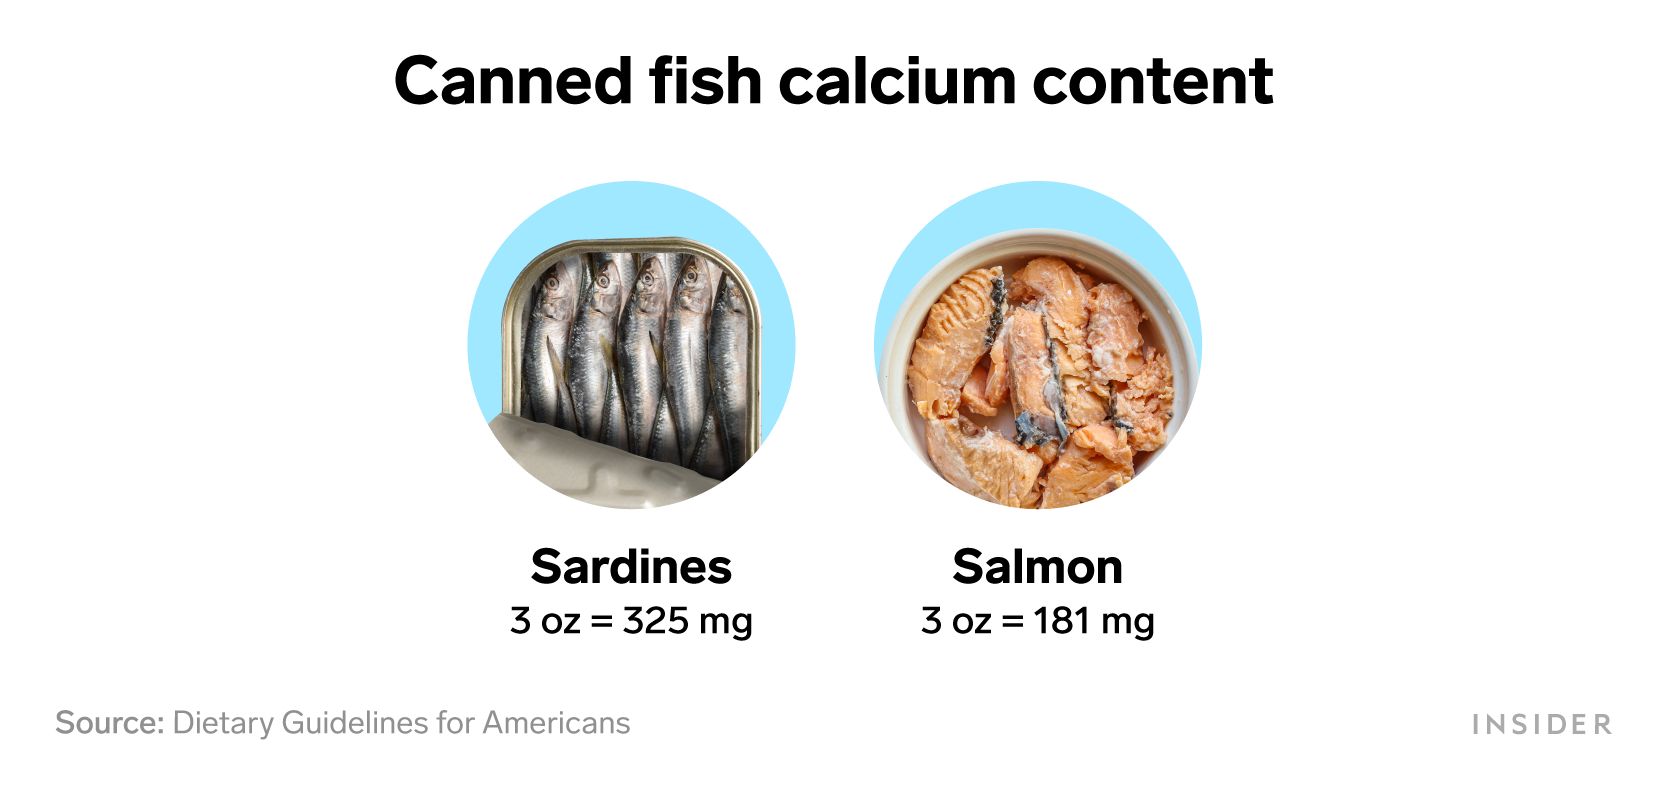 Foods that are rich in calcium: Canned fish calcium content